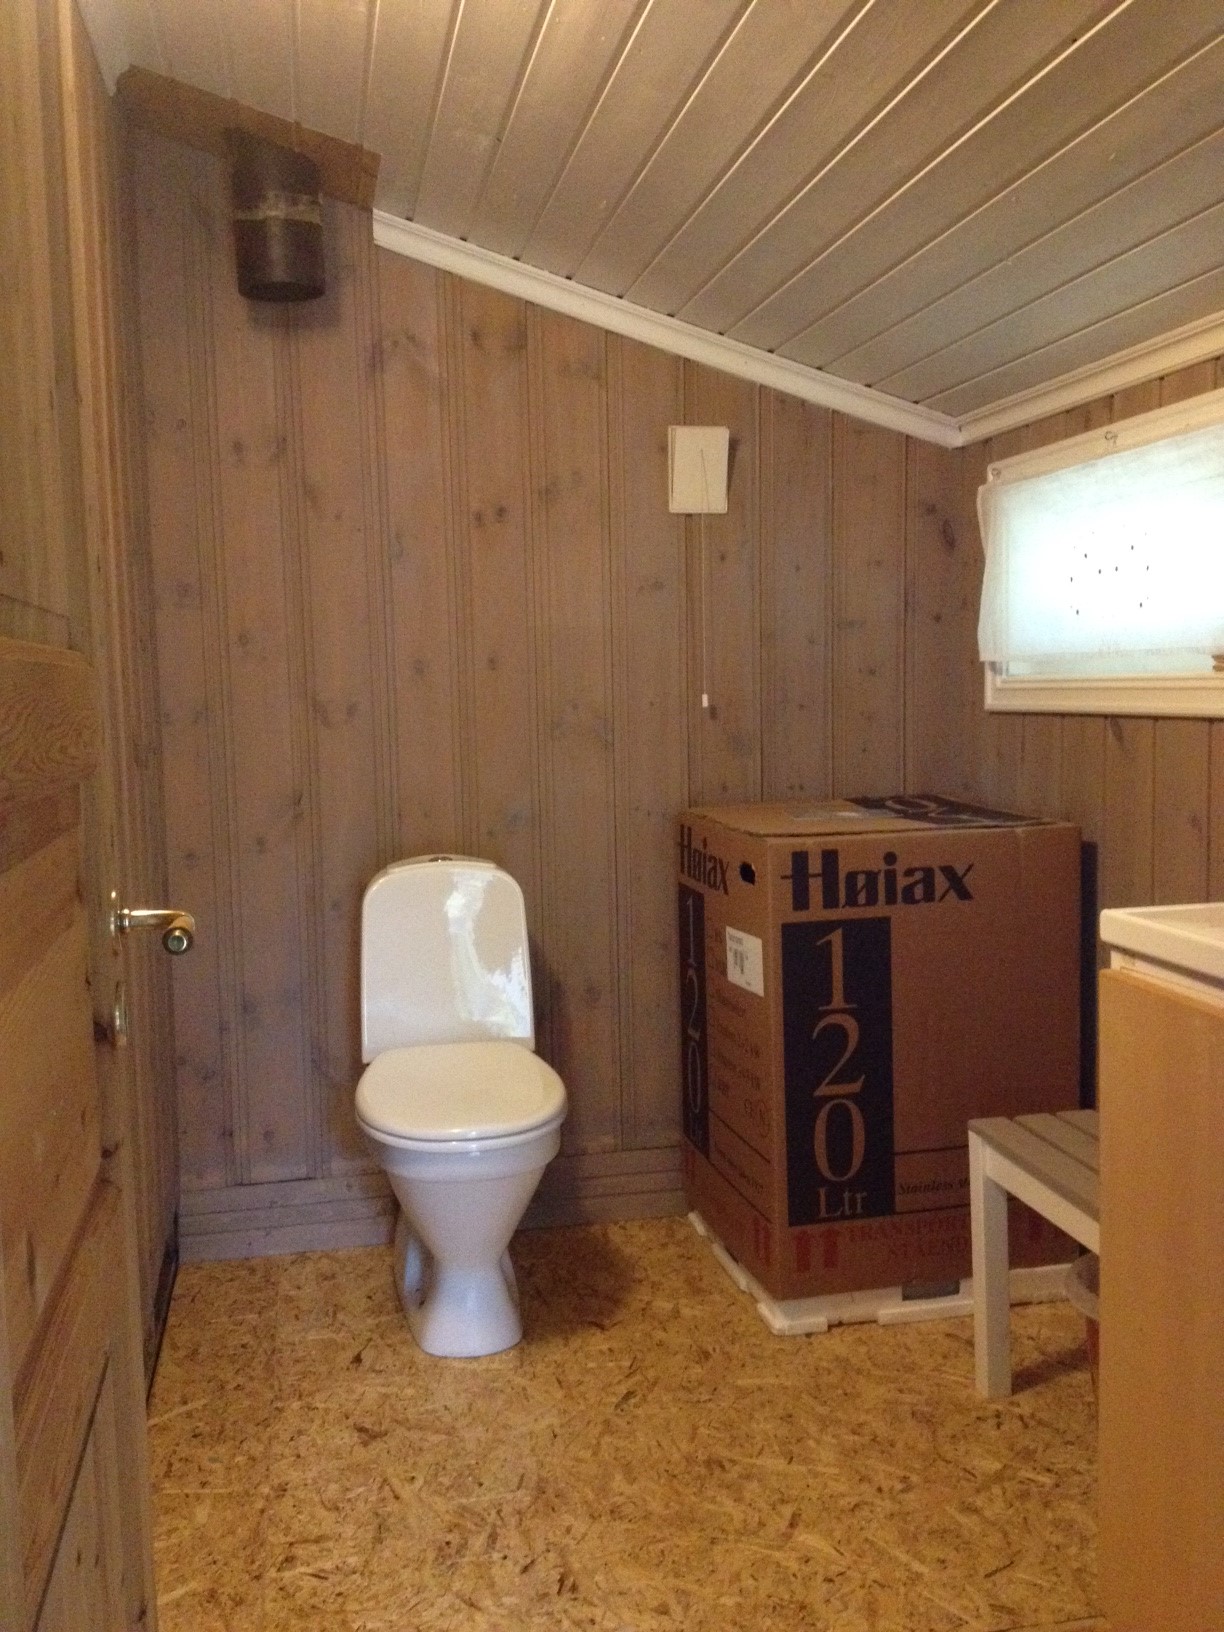 Bidda: Snurredass ut og WC inn (hytte) - 71 WC.JPG - Bidda